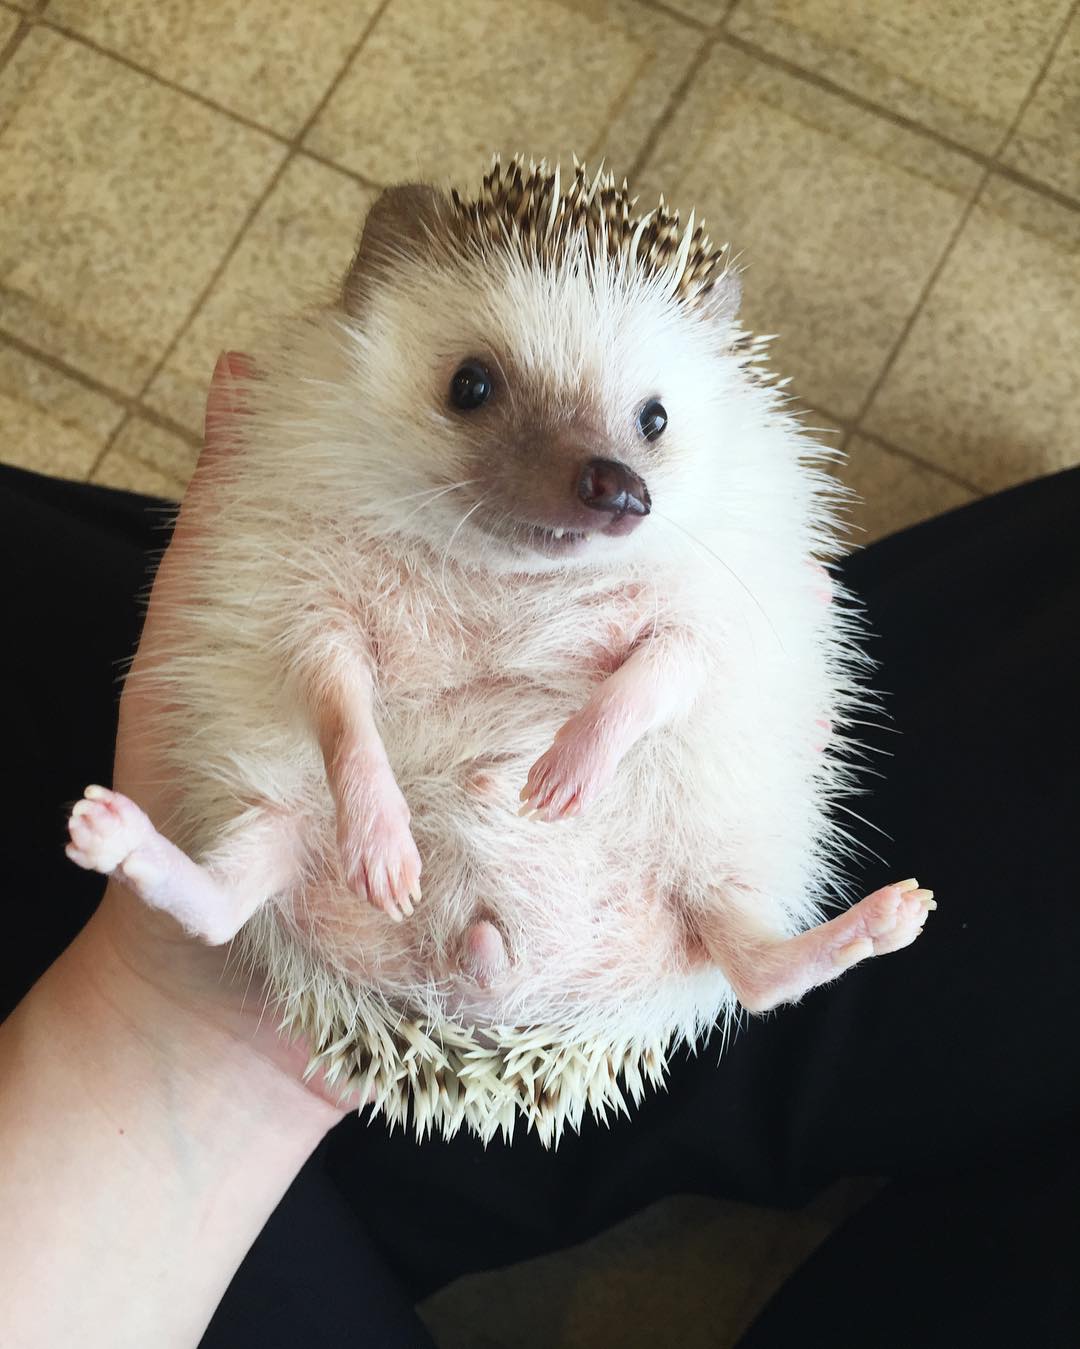 This ‘Vampire’ Hedgehog Is Instagram’s Newest Star